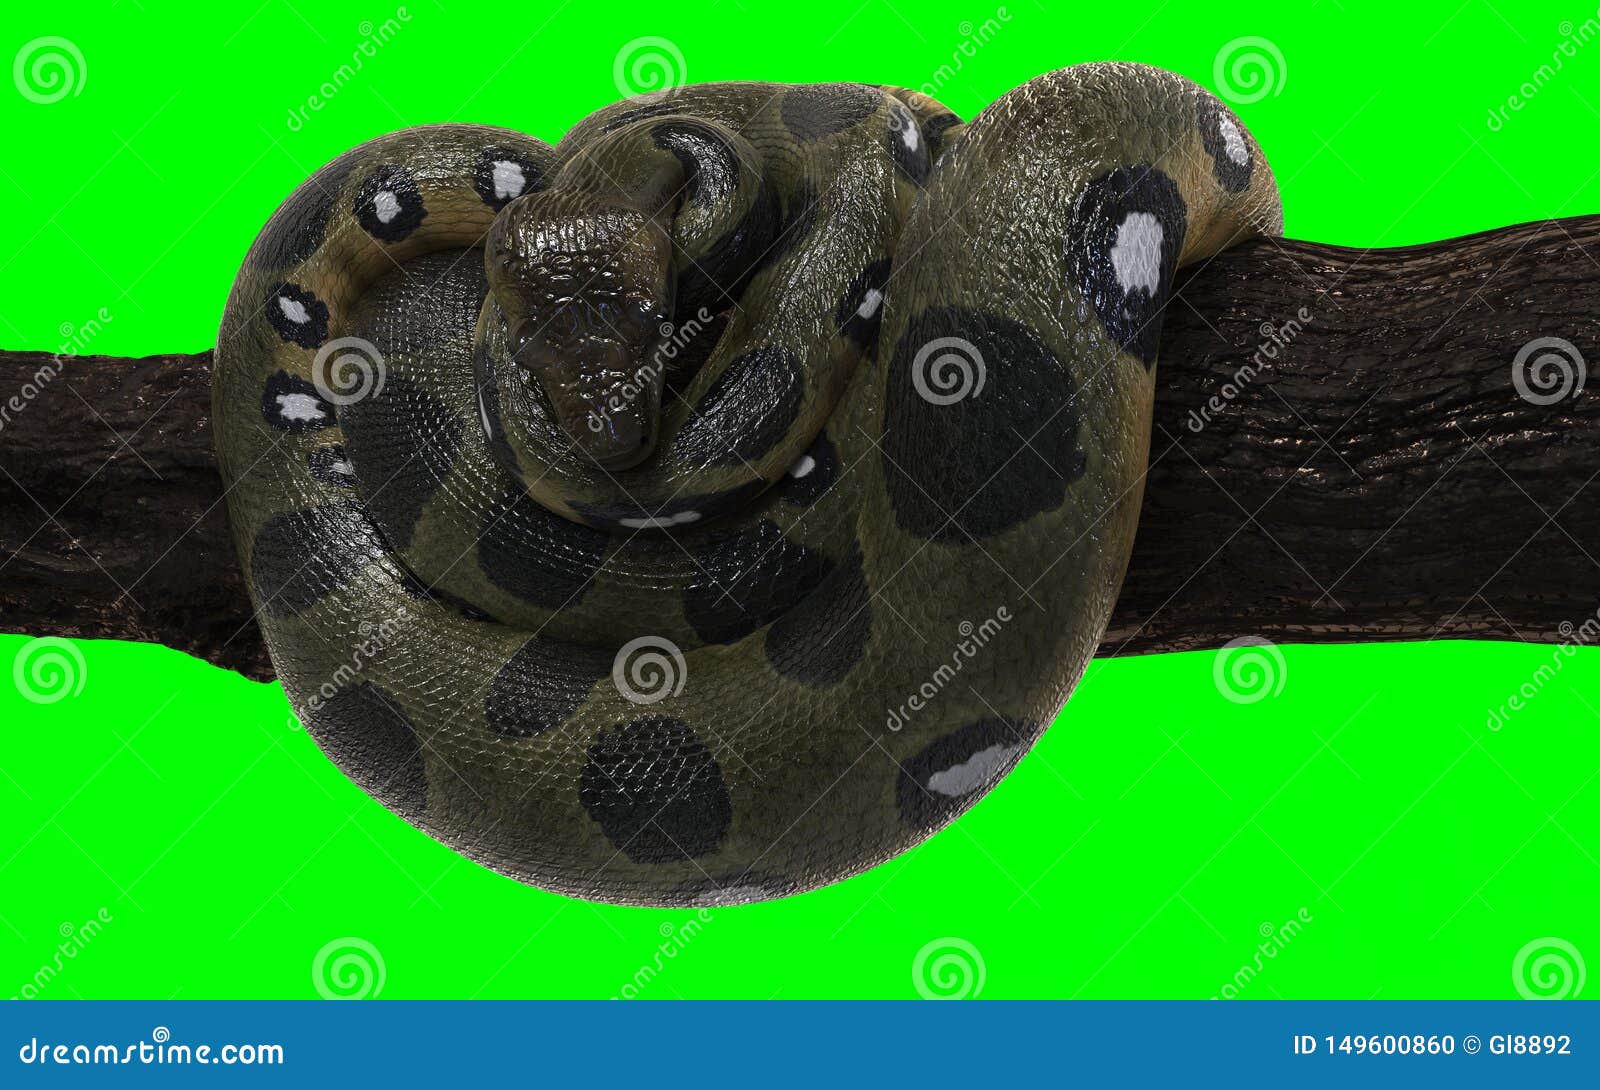 Boa Constrictor With Clipping Path Green Anaconda Stock Photo